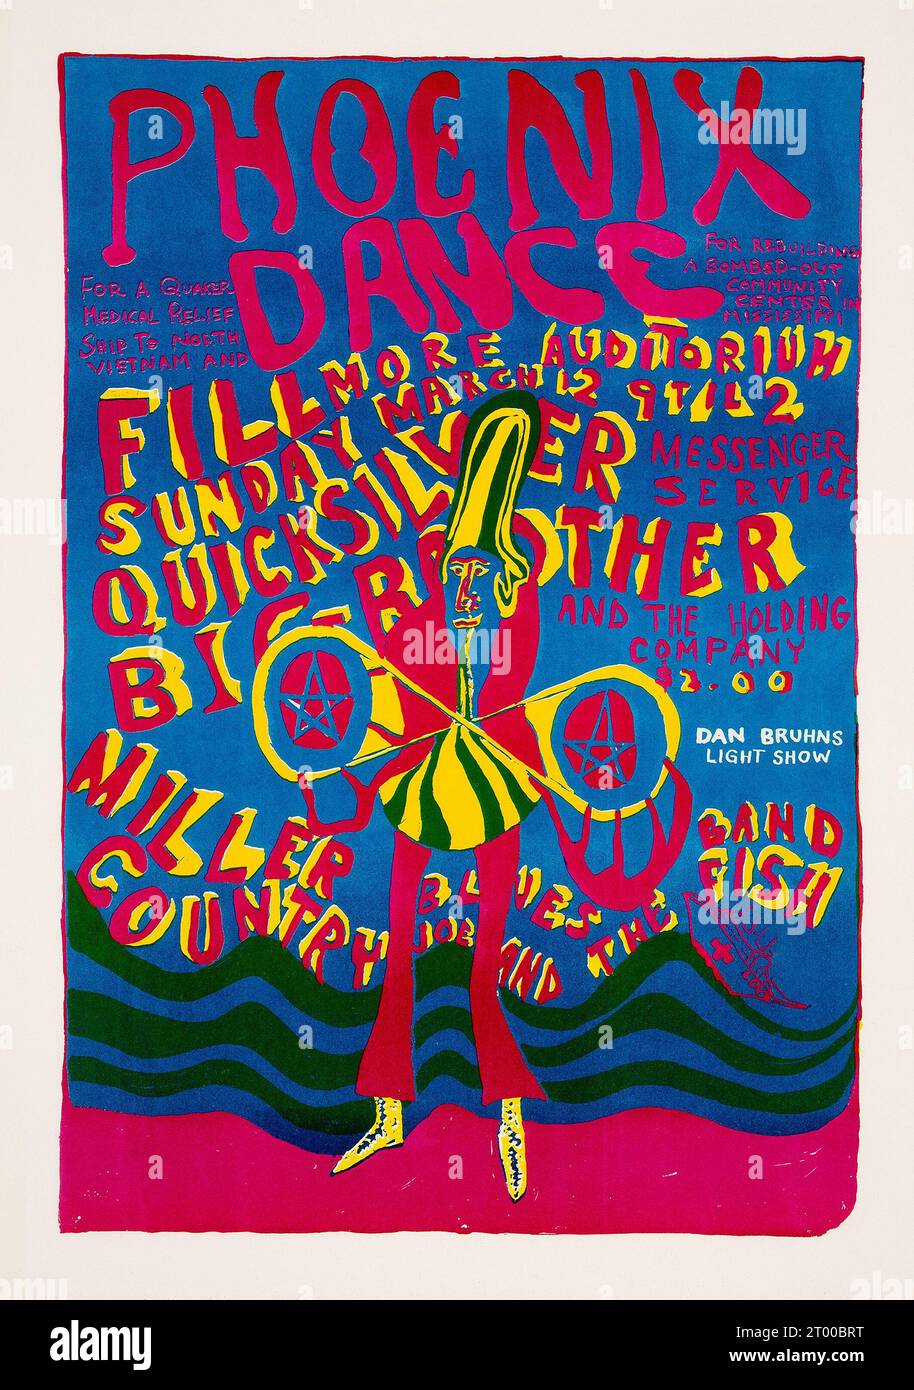 Janis Joplin feat Big Brother, Quicksilver Messenger Service, Steve Miller - 1967 Fillmore Benefit - Vintage Concert Poster Stock Photo